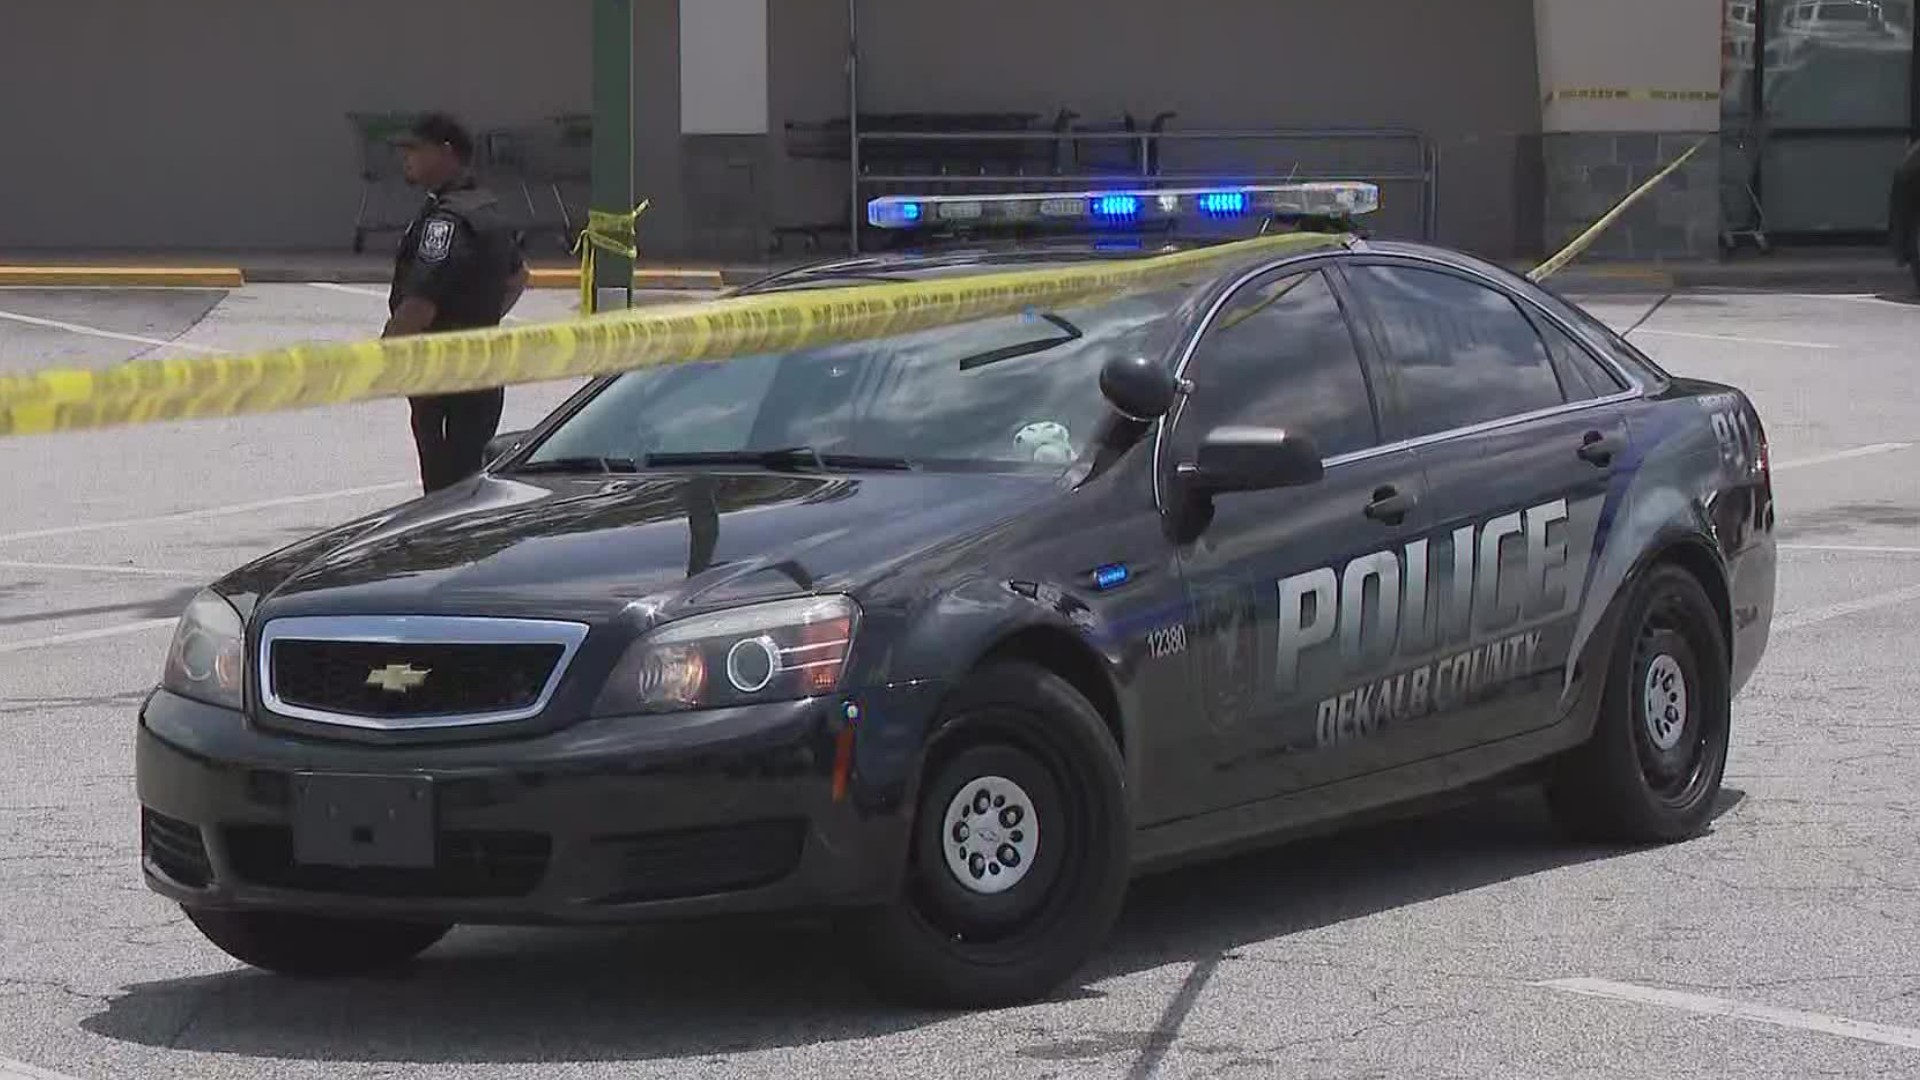 The shooting happened on Pinewood Drive in DeKalb County.